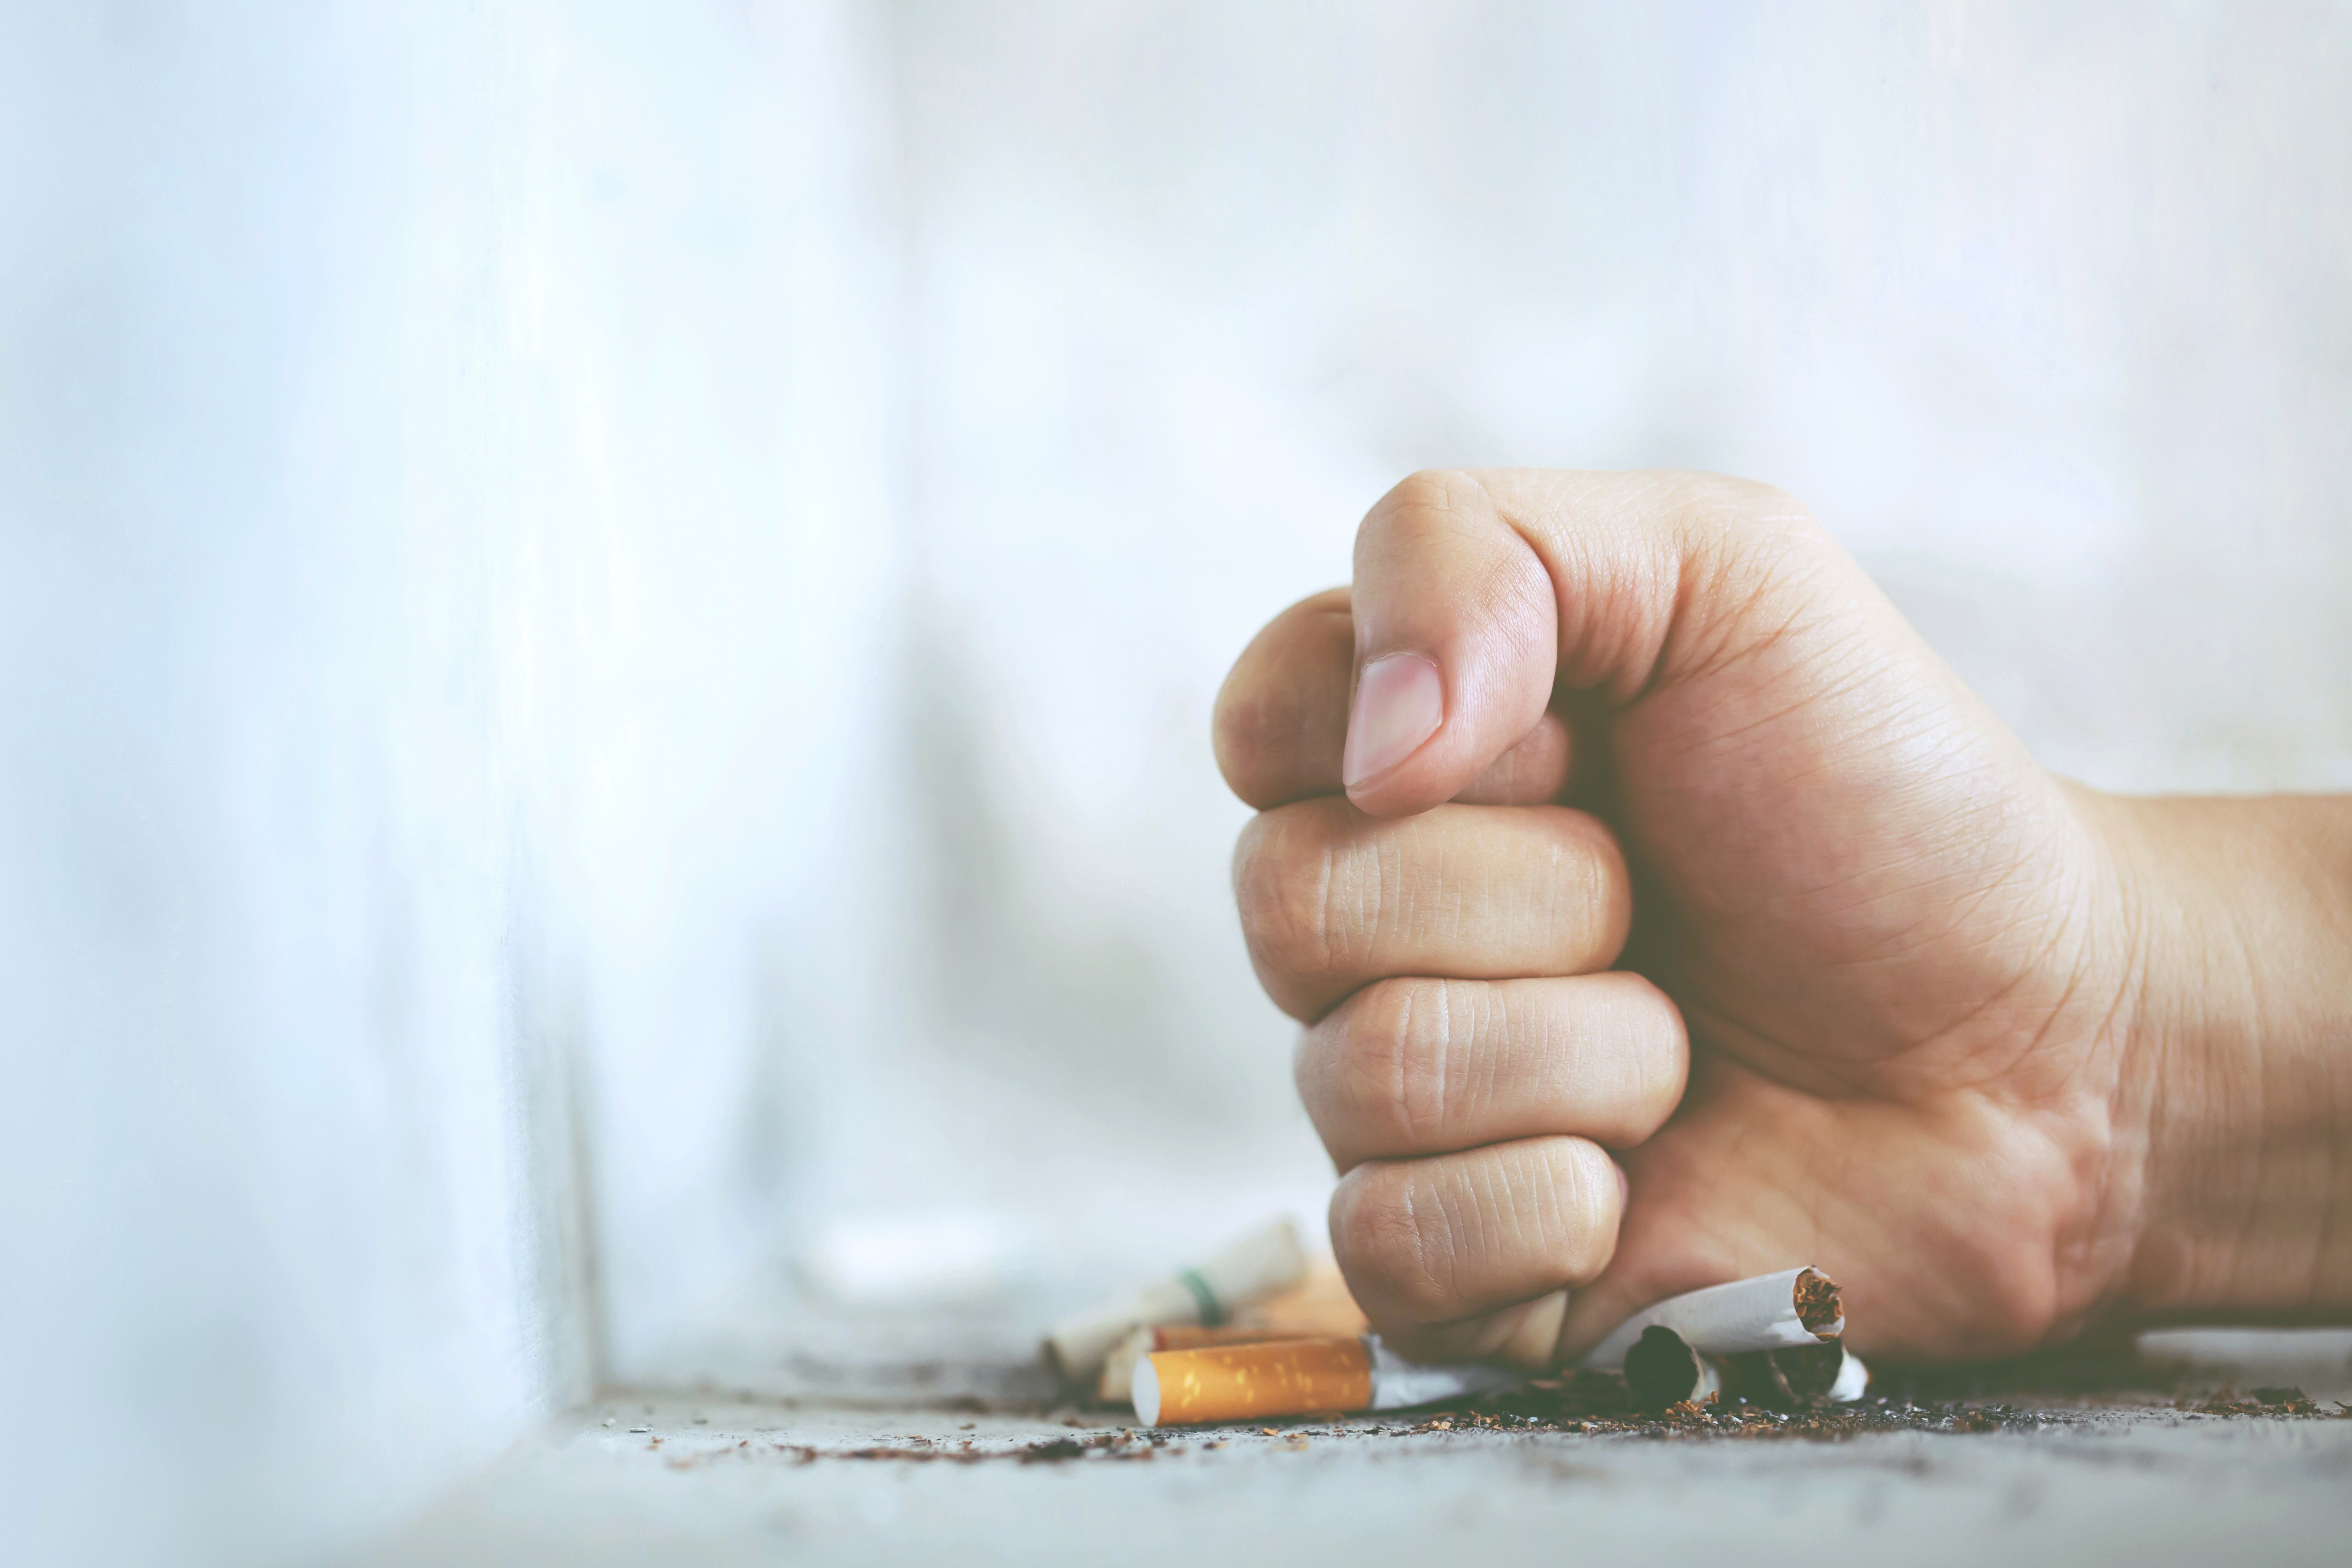 Man’s fist smashing a cigarette